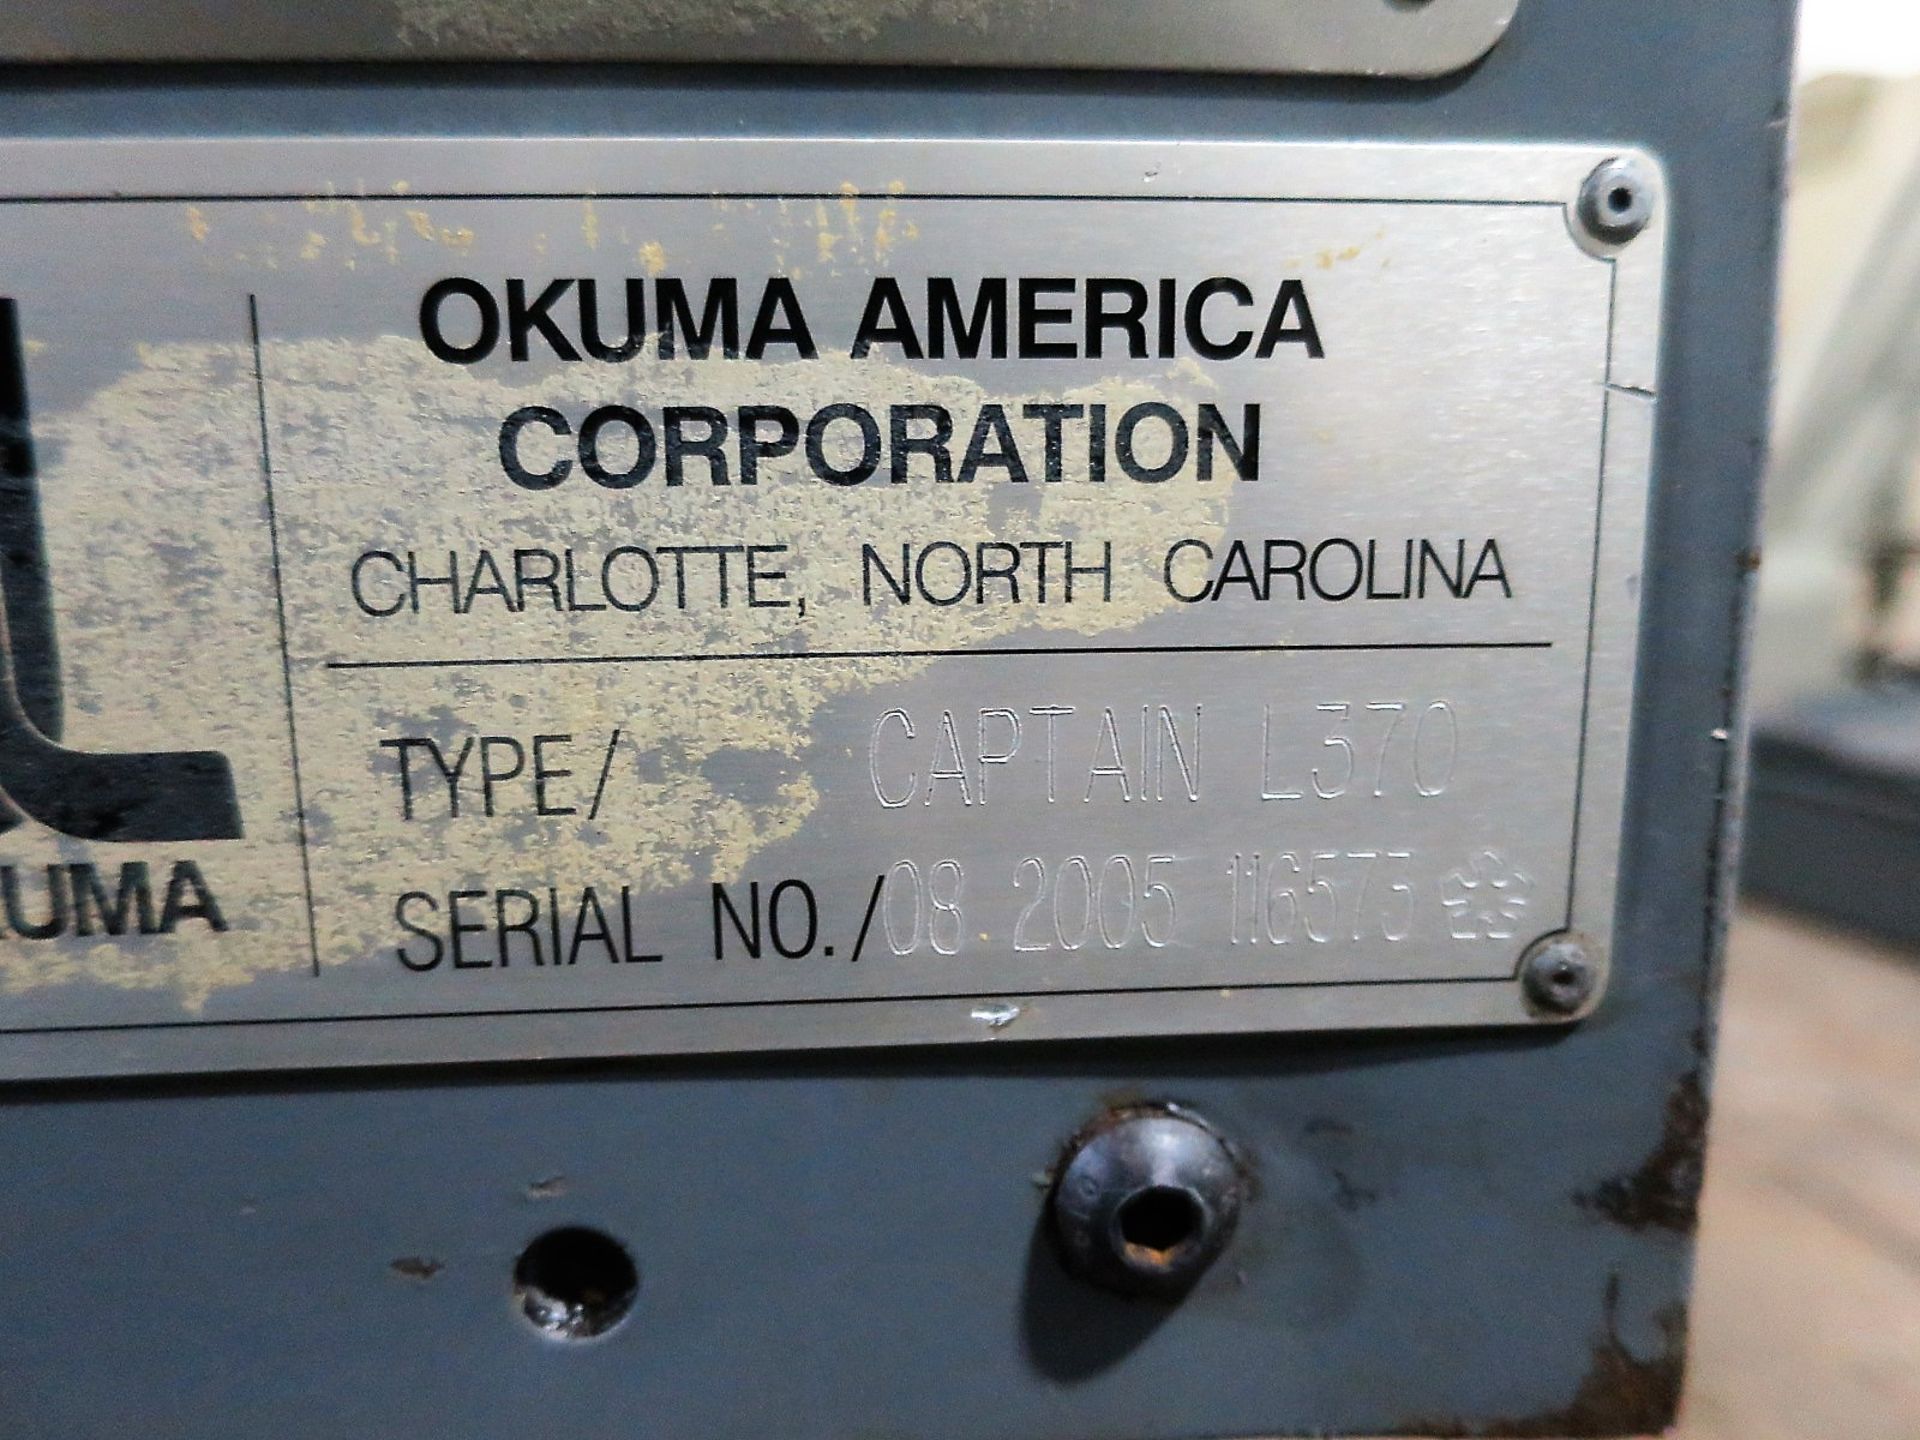 Okuma Captain L370-2-Axis CNC Turning Center Lathe, S/N 116573, New 2005 - Image 10 of 10